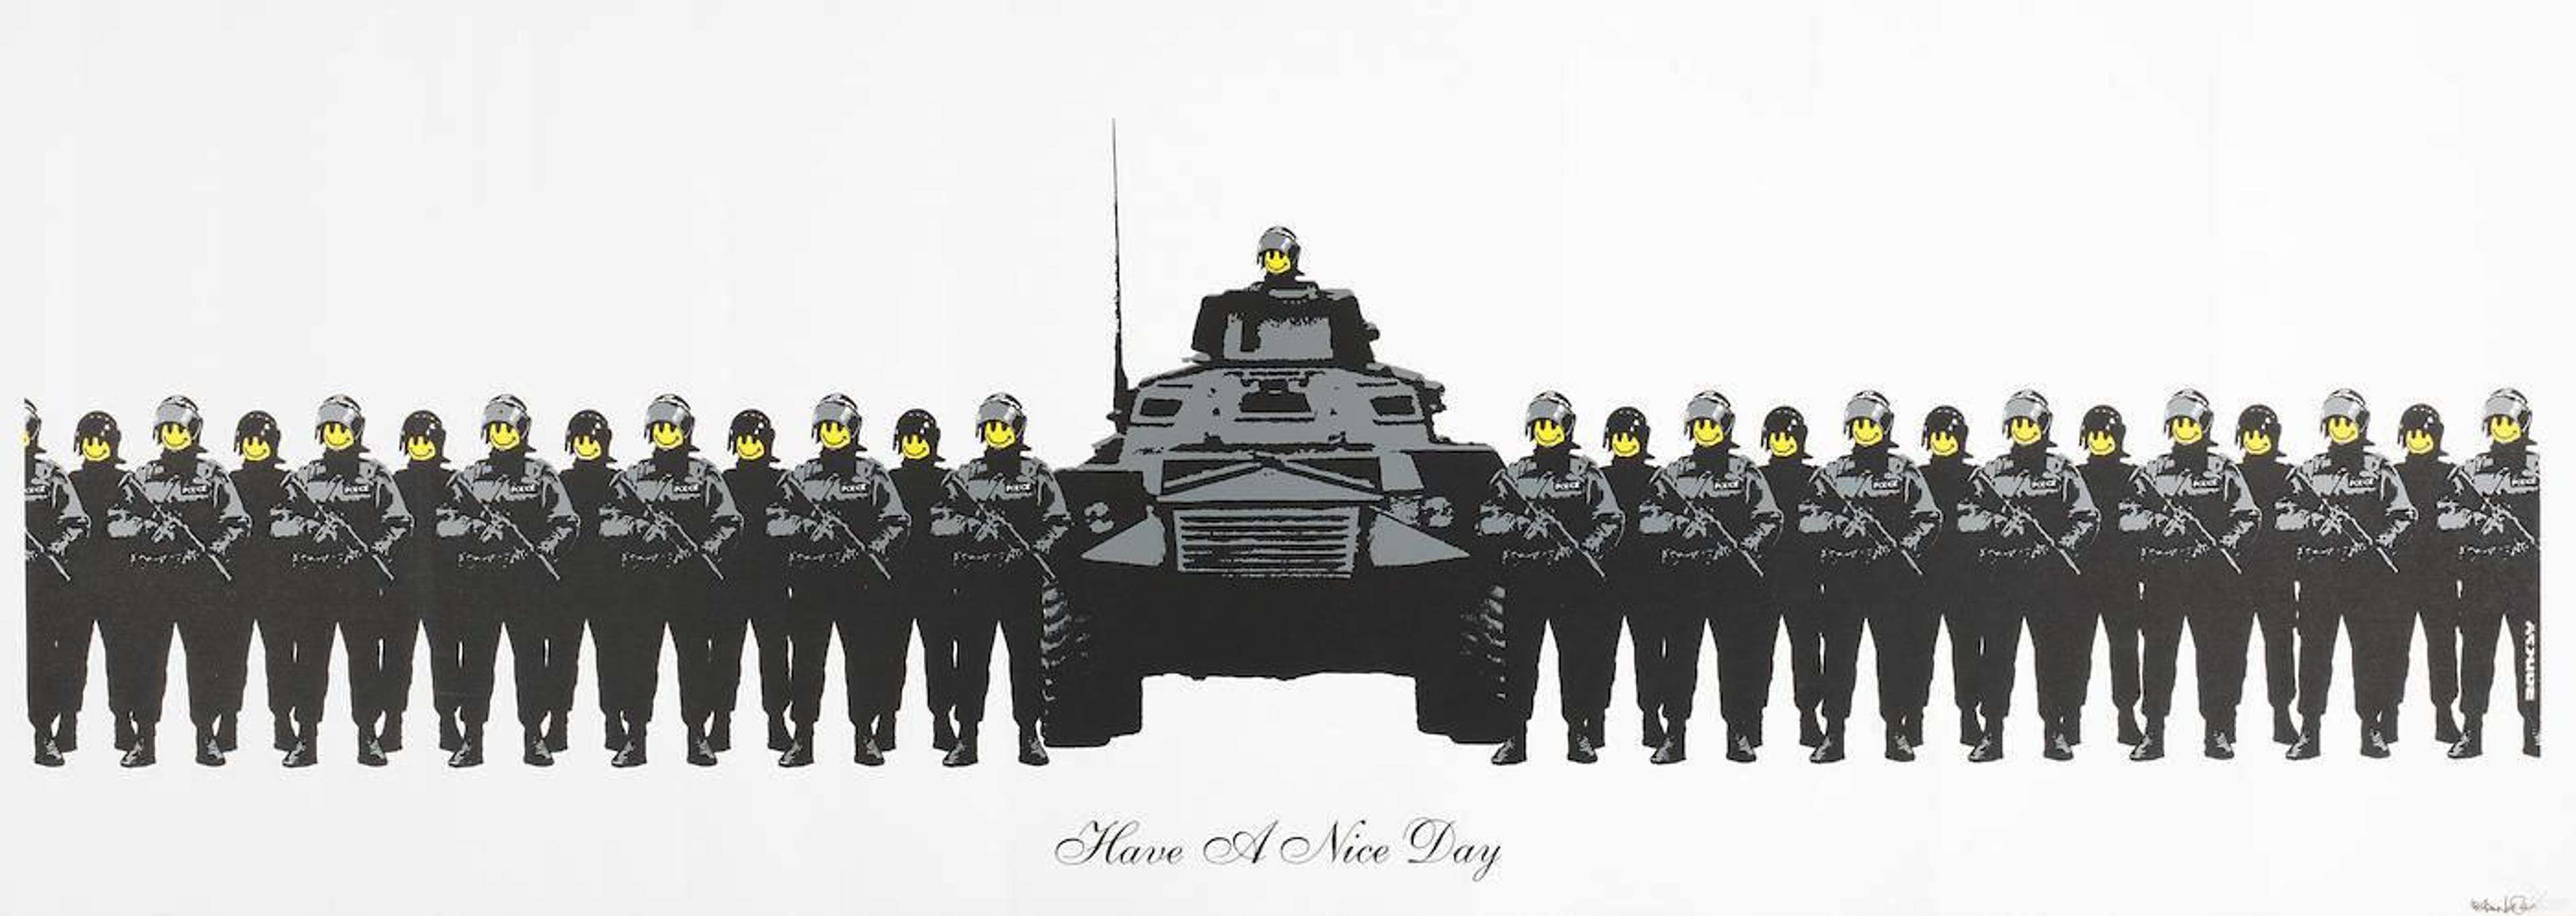 Have A Nice Day by Banksy - MyArtBroker